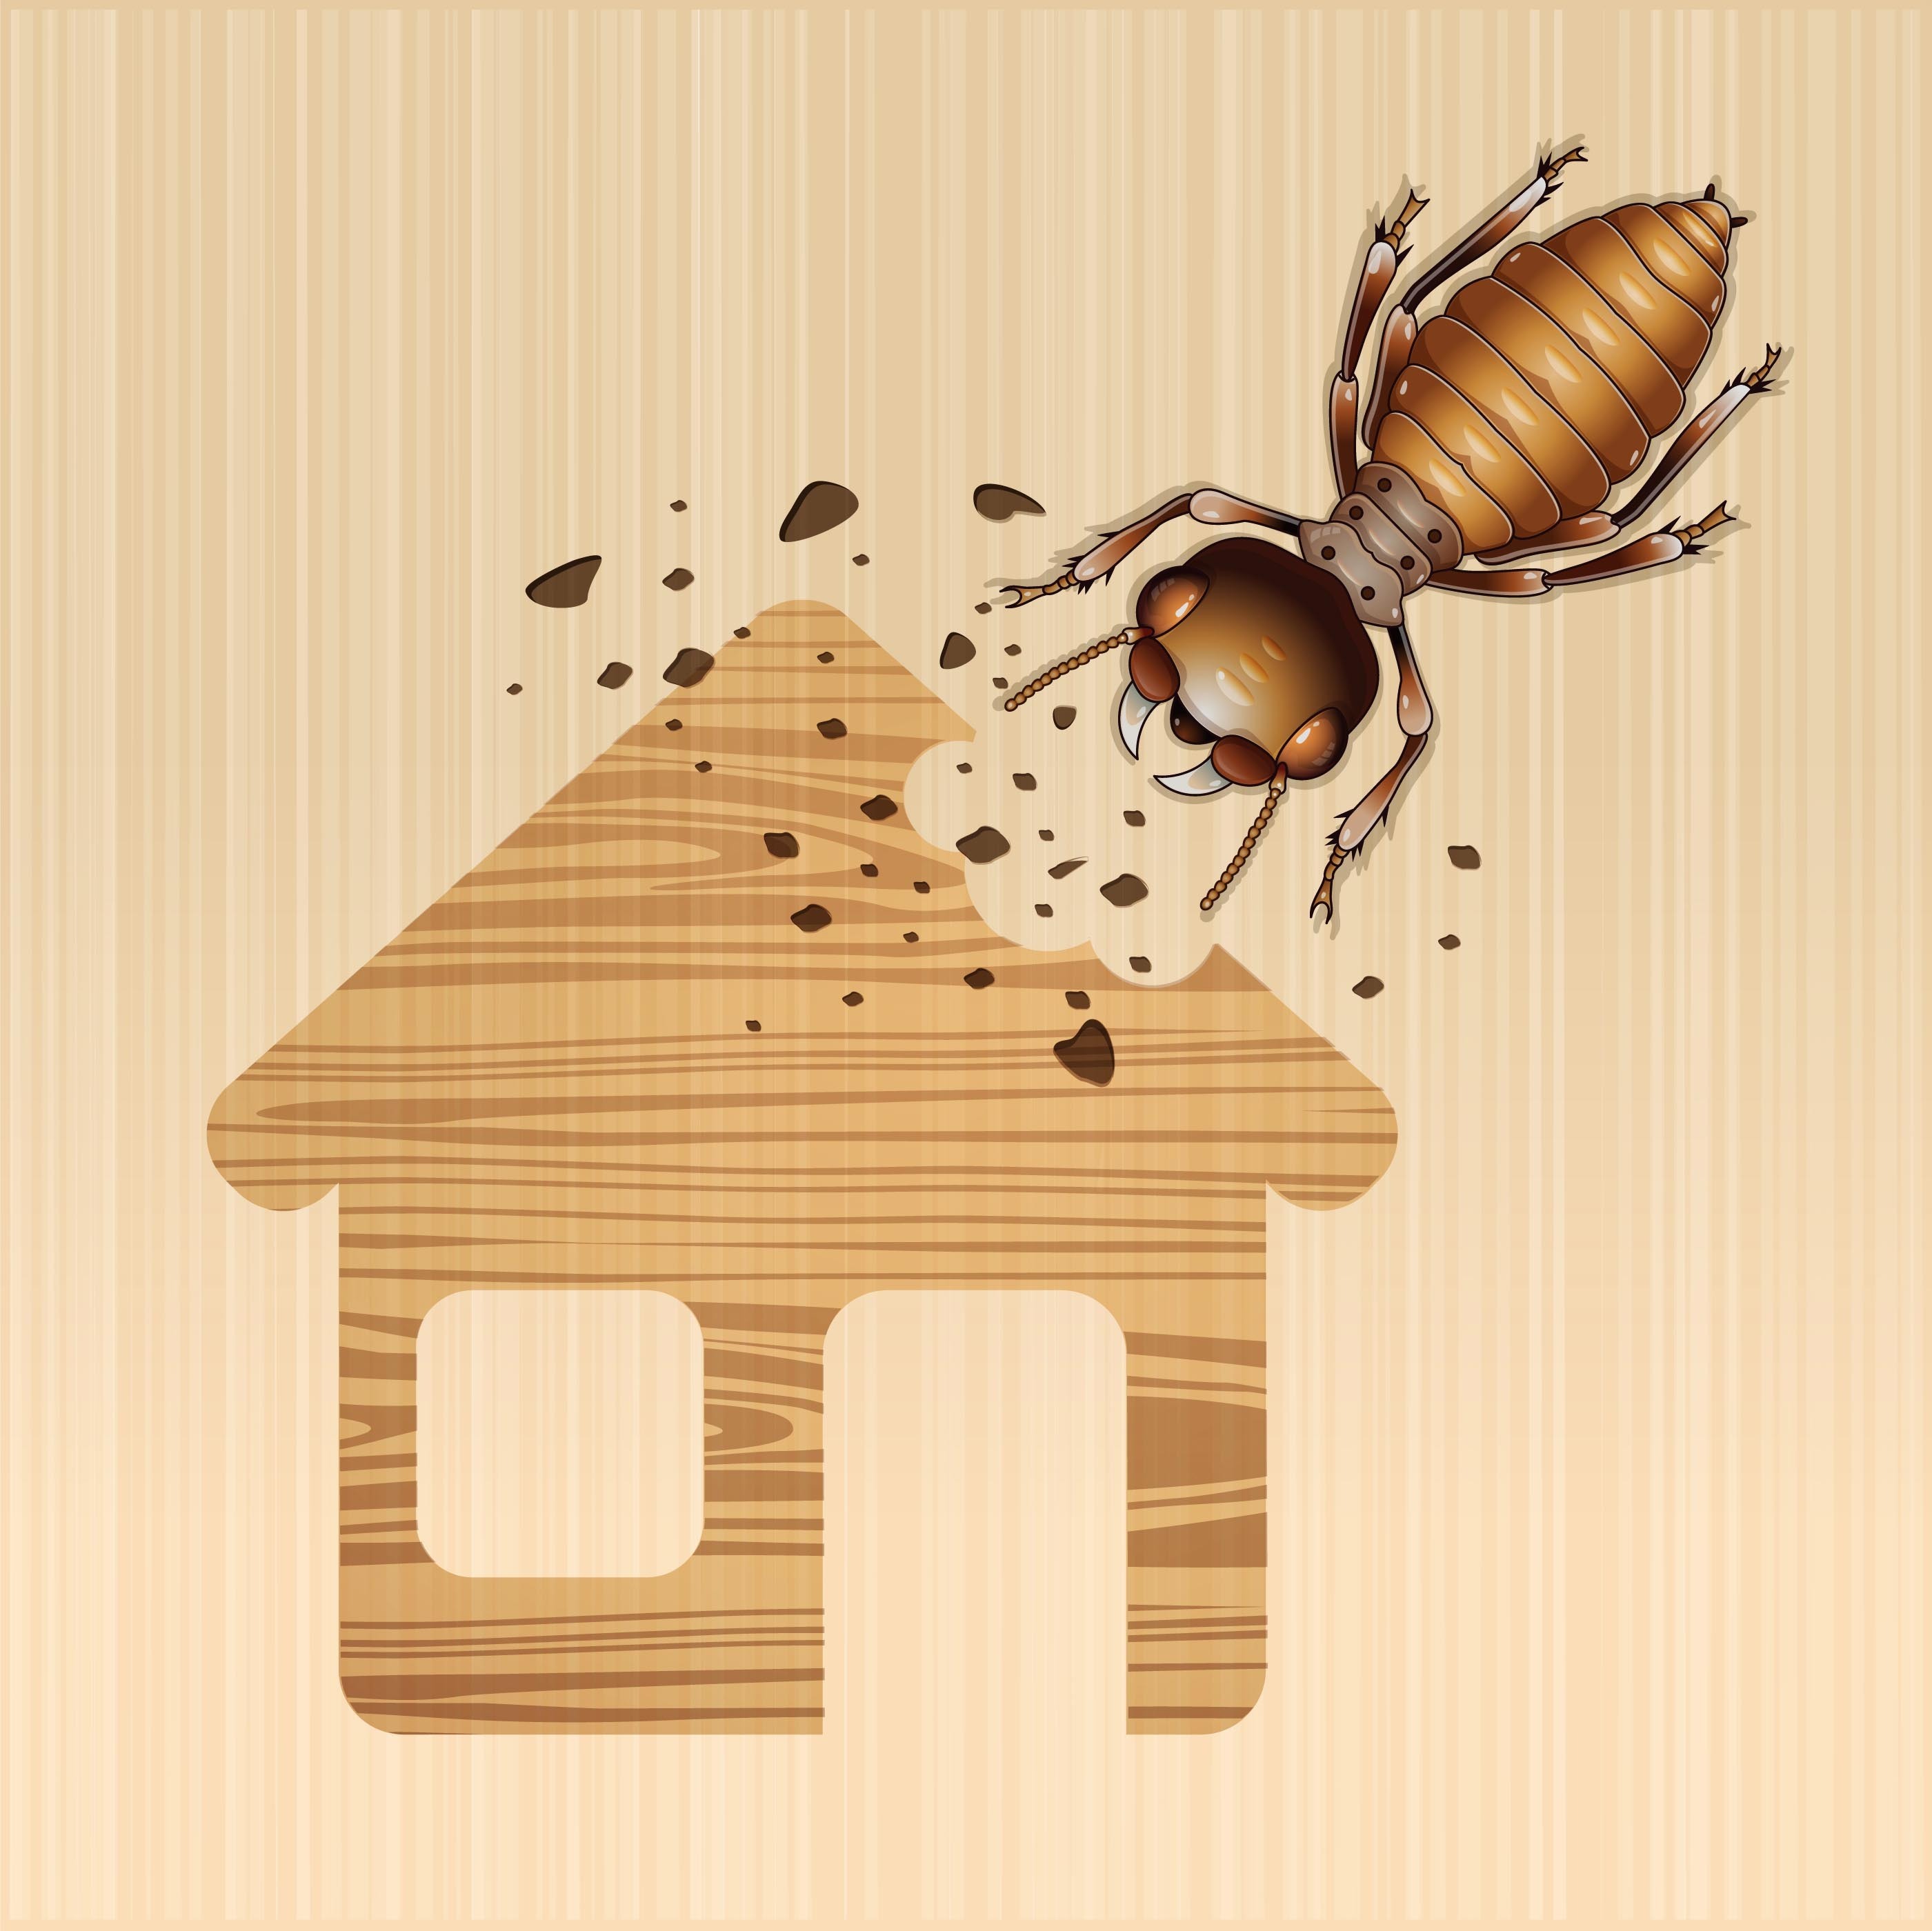 termite-damage-house-vector (88907749)